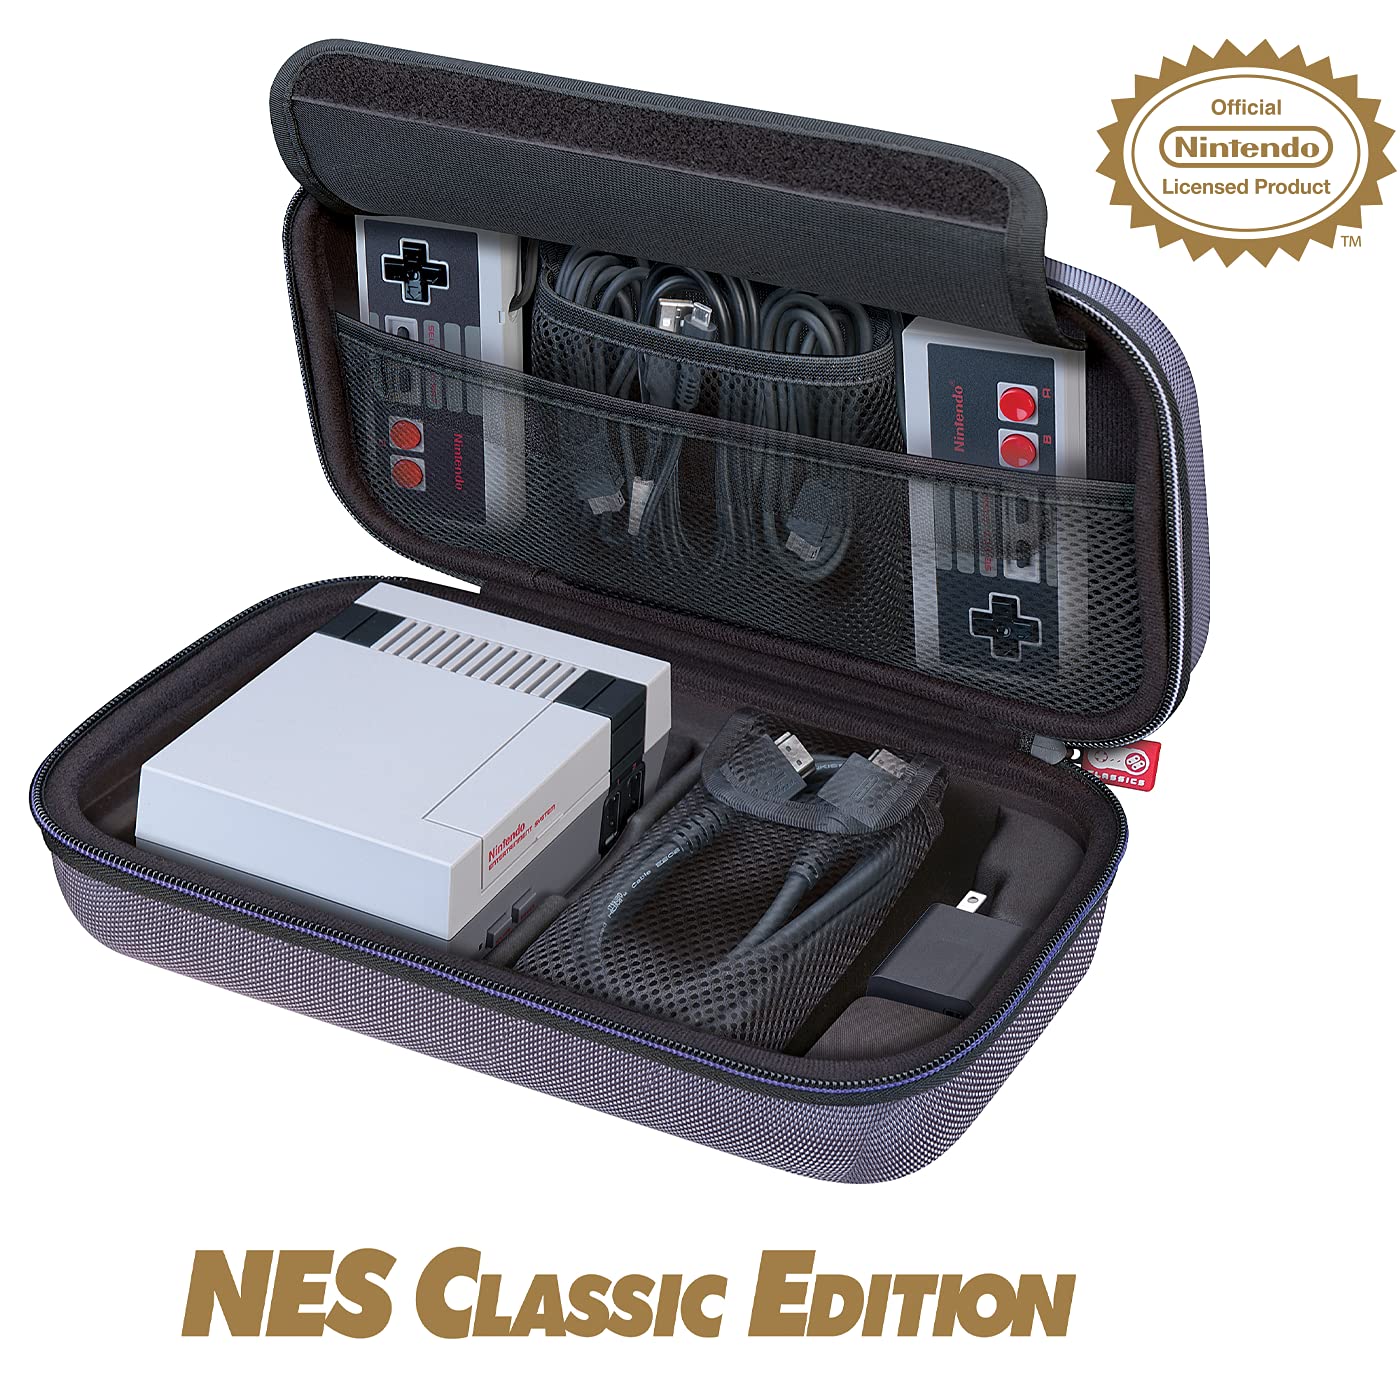 Accessory | Nintendo | NES SNES Classic Edition Deluxe Travel Case